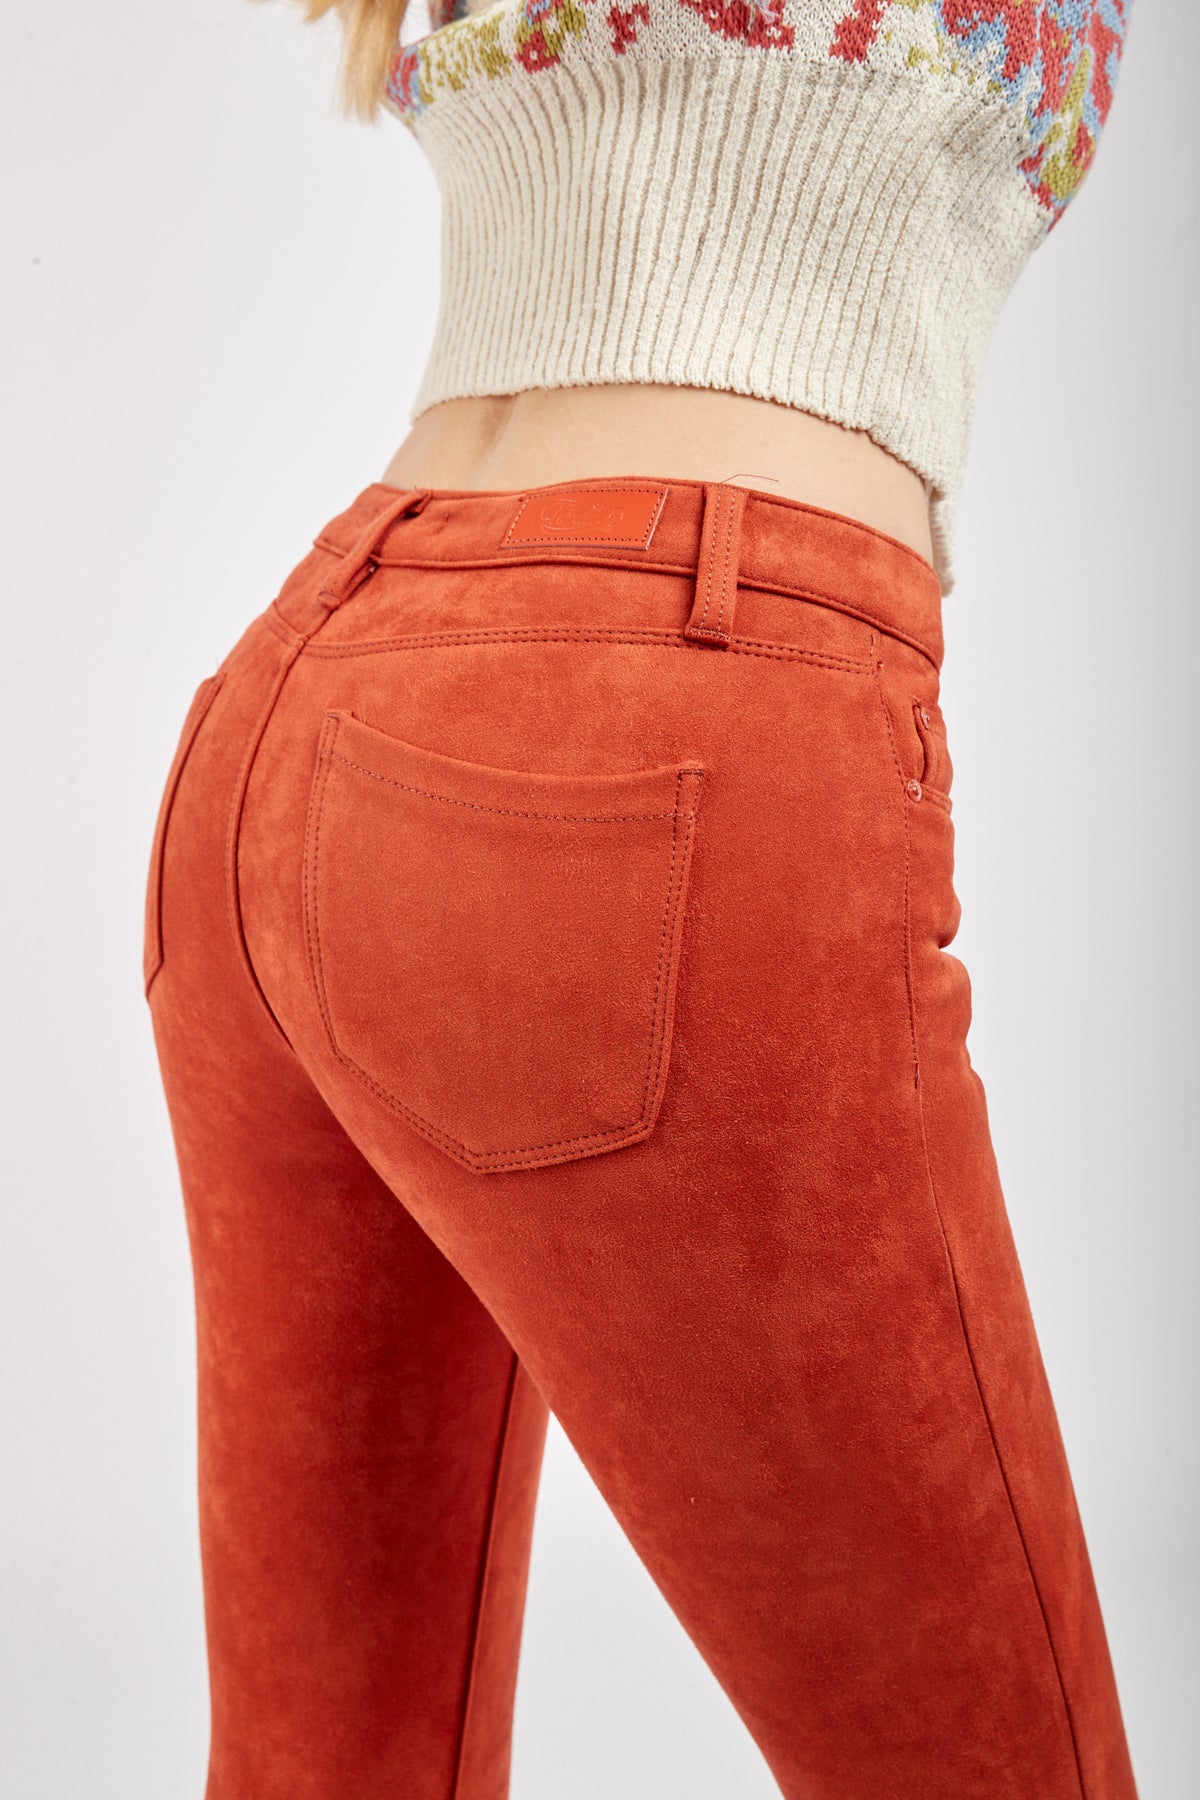 Swedish pants - Peach